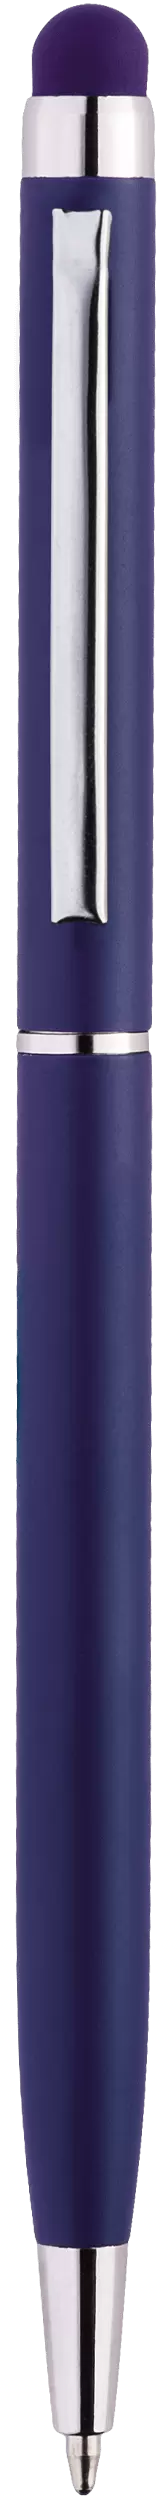 Ручка KENO PREMIUM Темно-синяя 1115-14